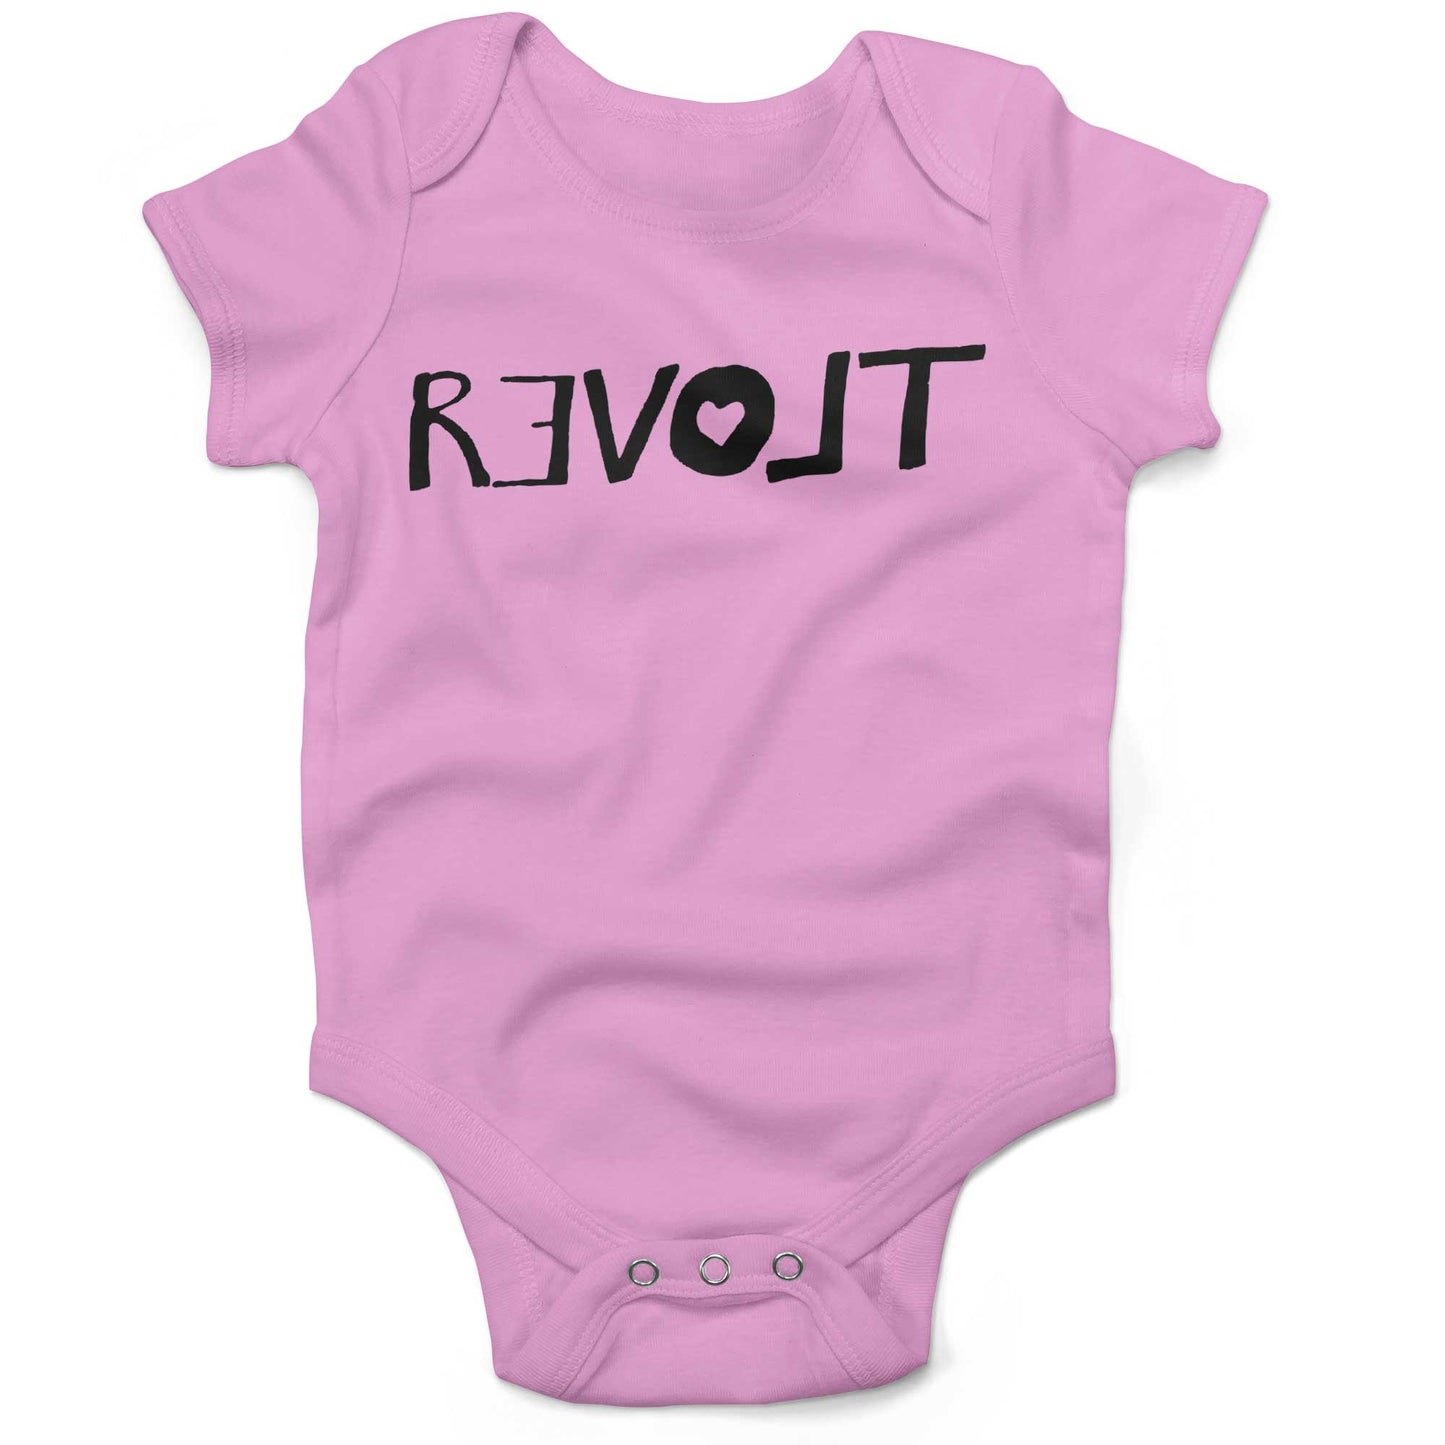 Revolt Infant Bodysuit or Raglan Baby Tee-Organic Pink-3-6 months